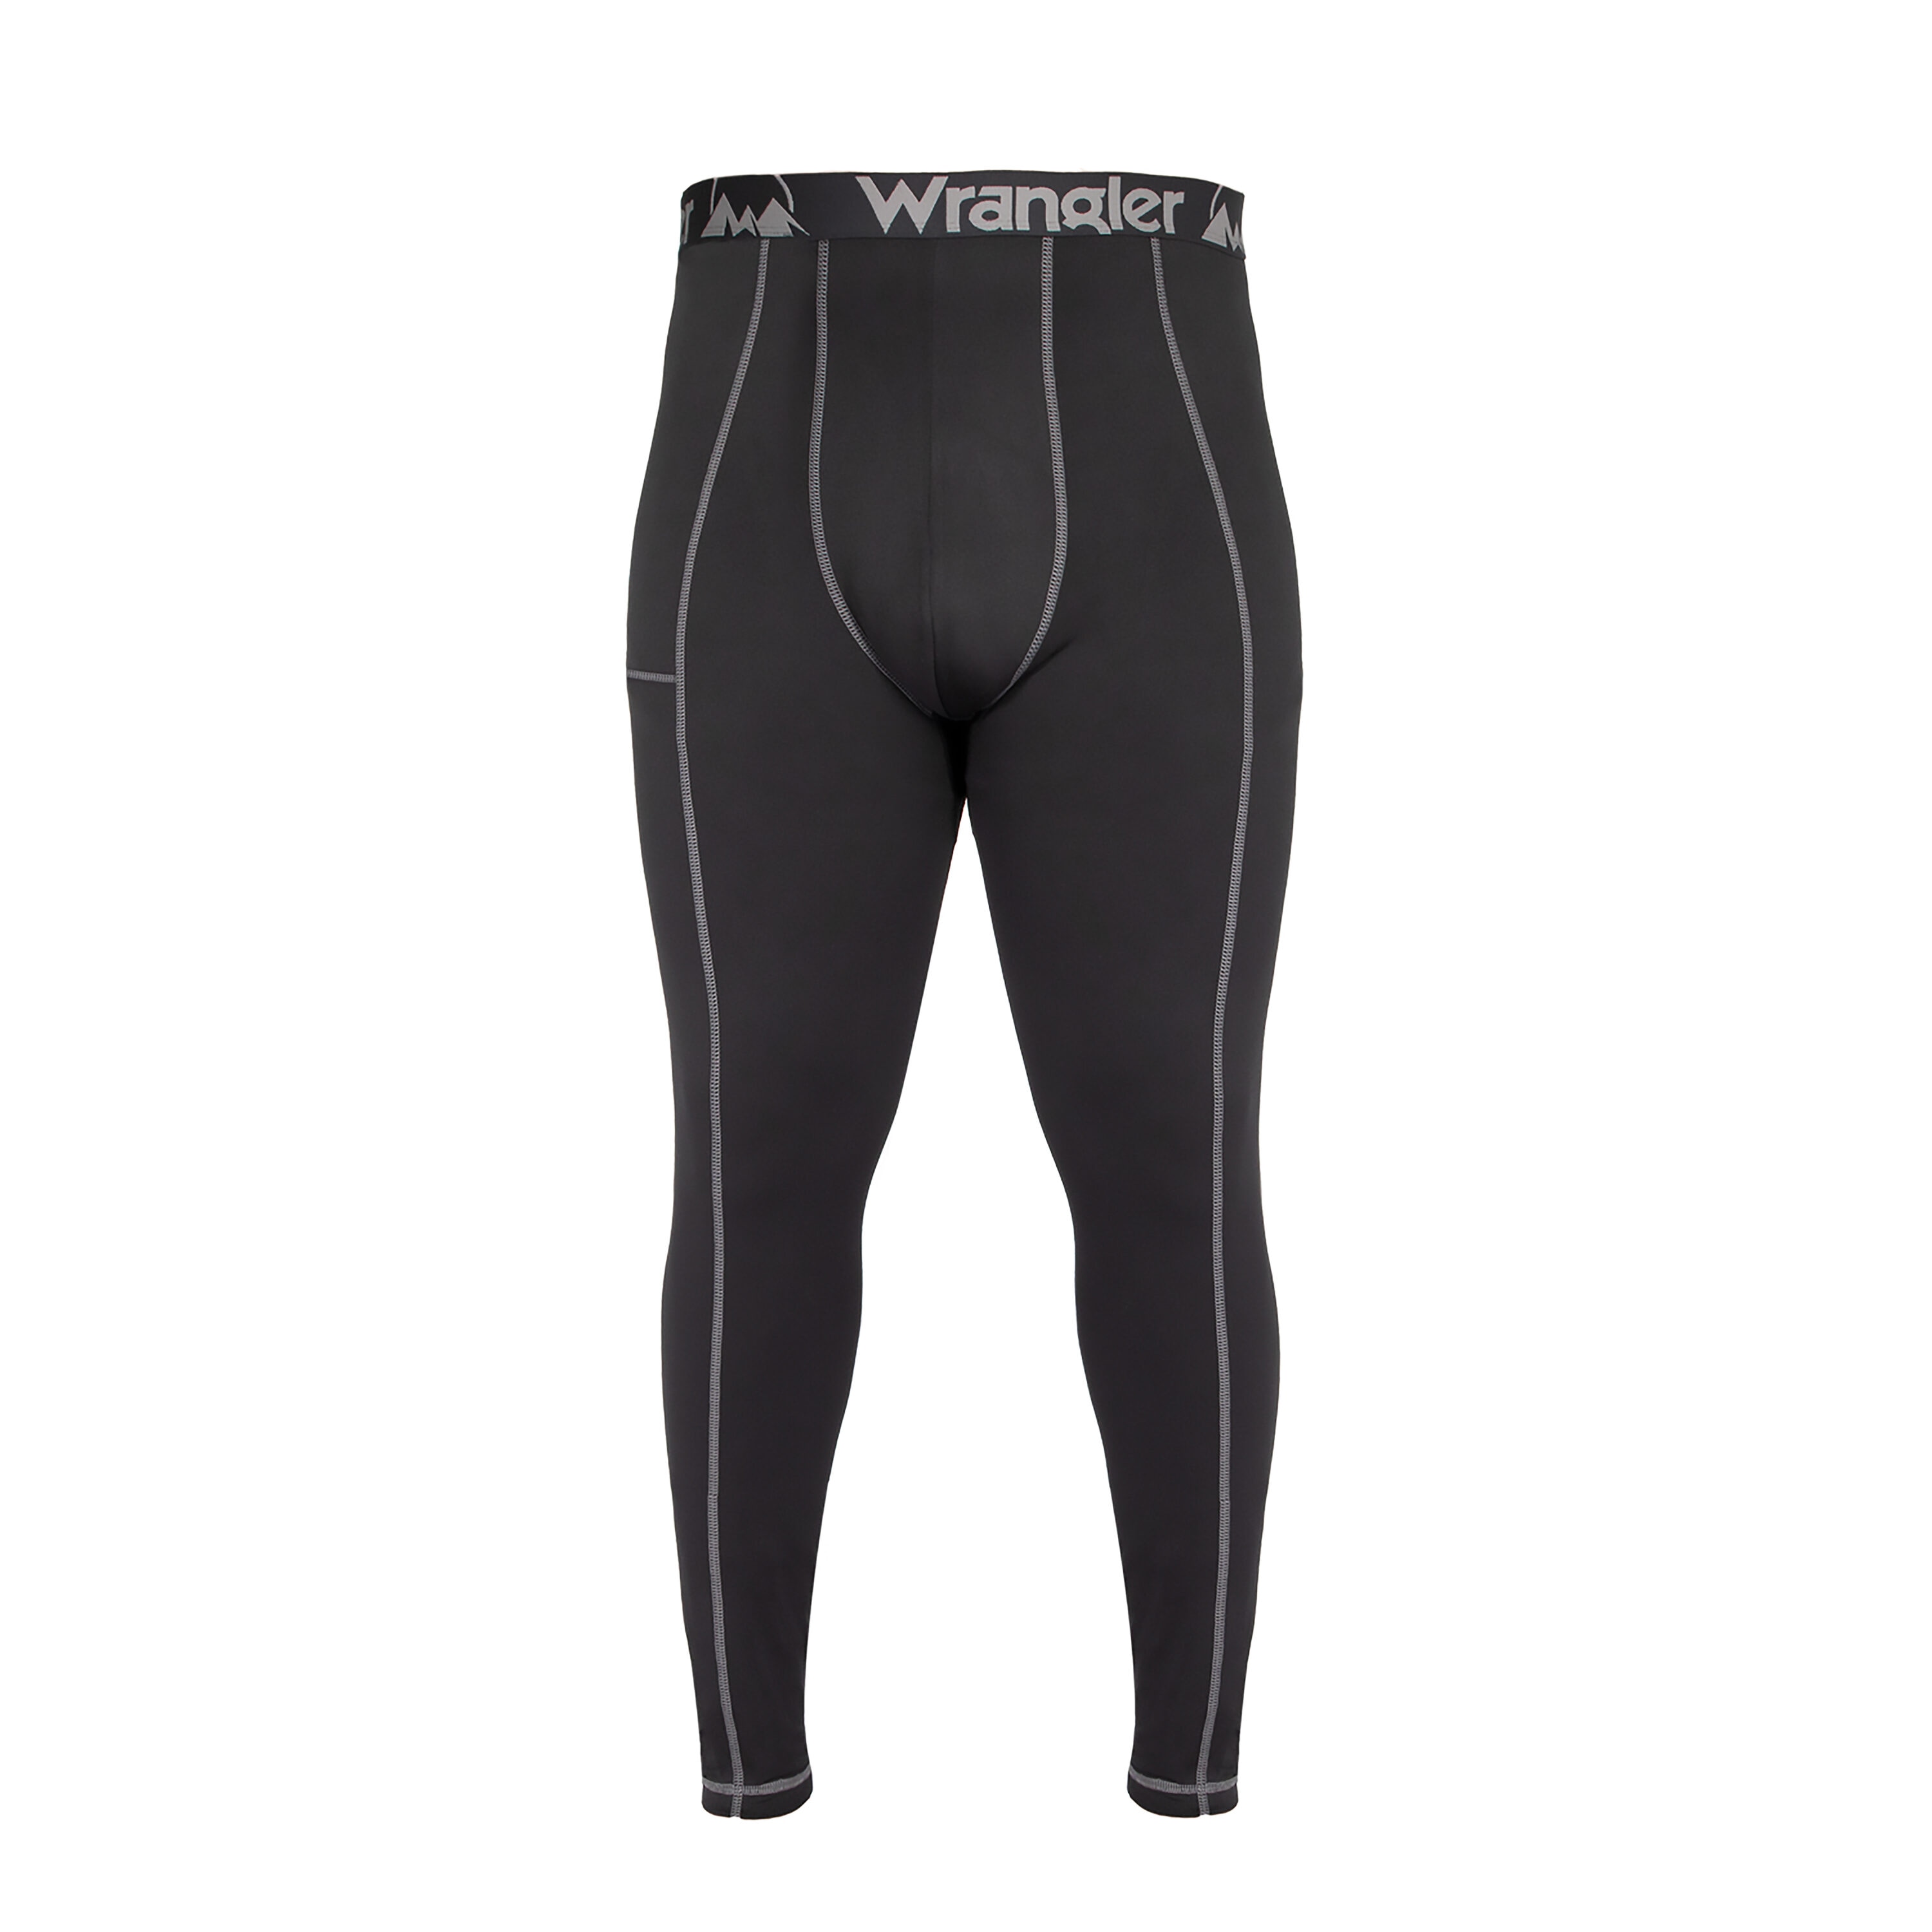  Wrangler - Base Layer Thermal Underwear Pants for Men